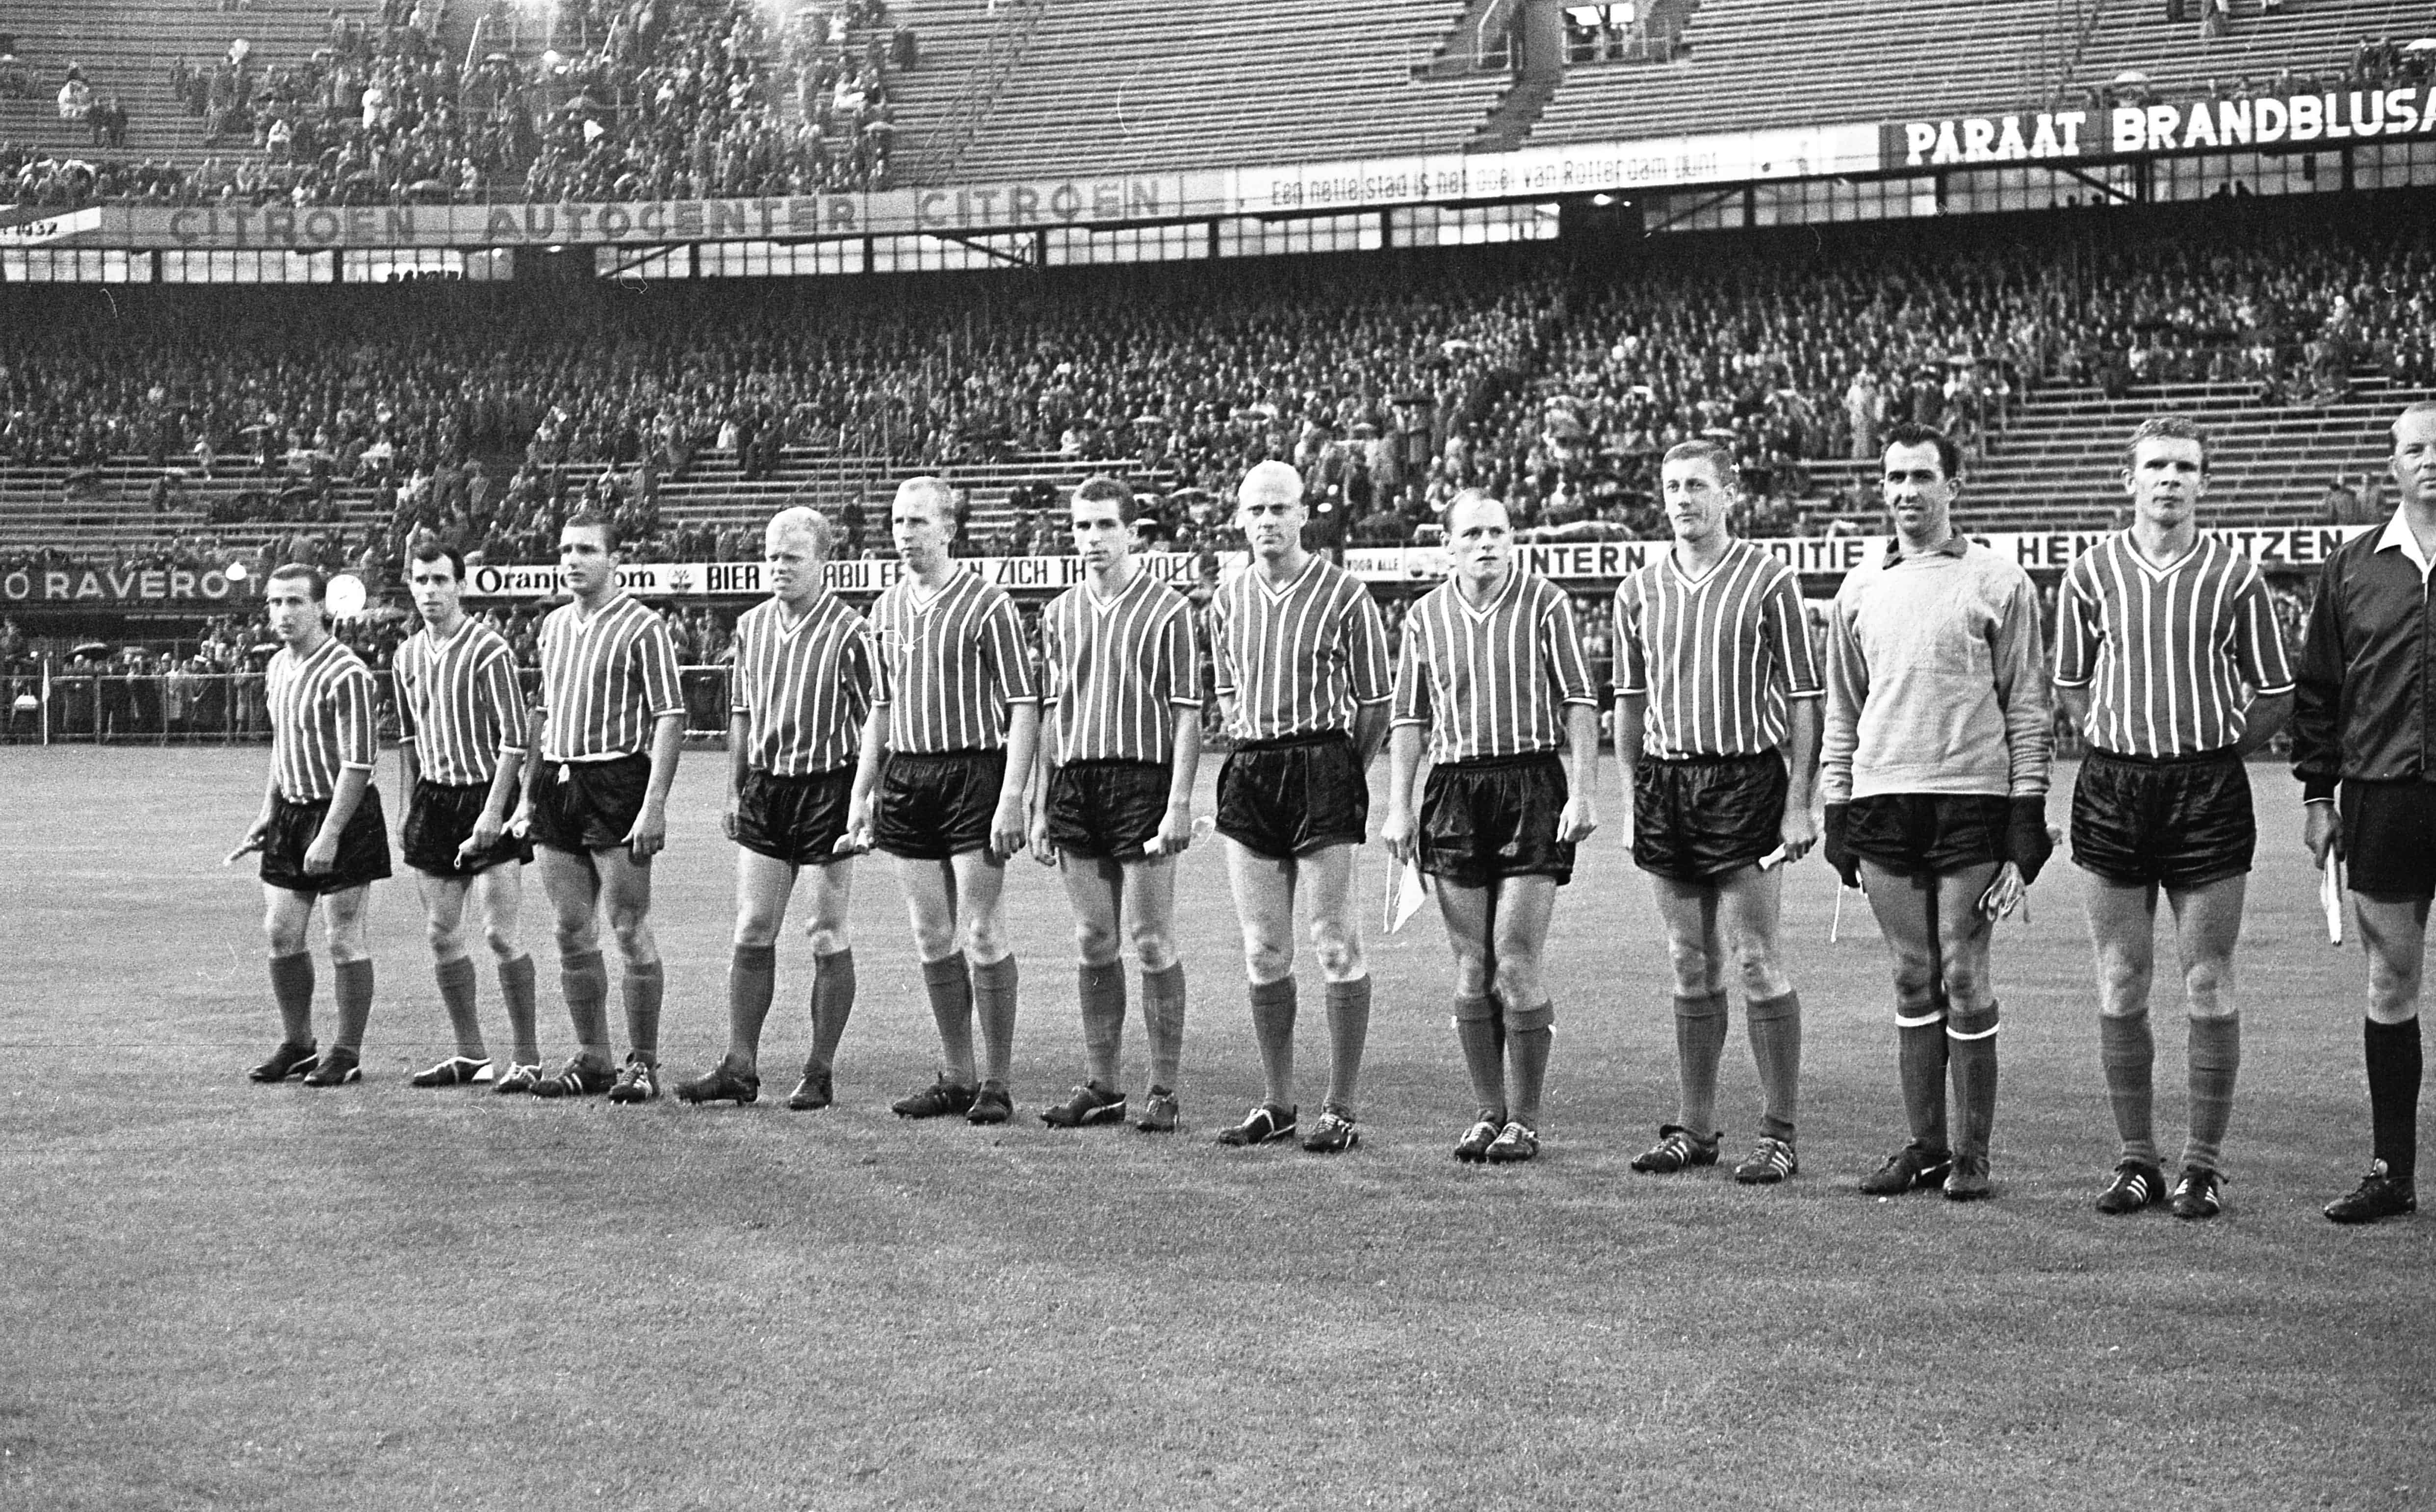 1964-08-08 Feyenoord-Spurs 4-3 300 DPI PB (6)